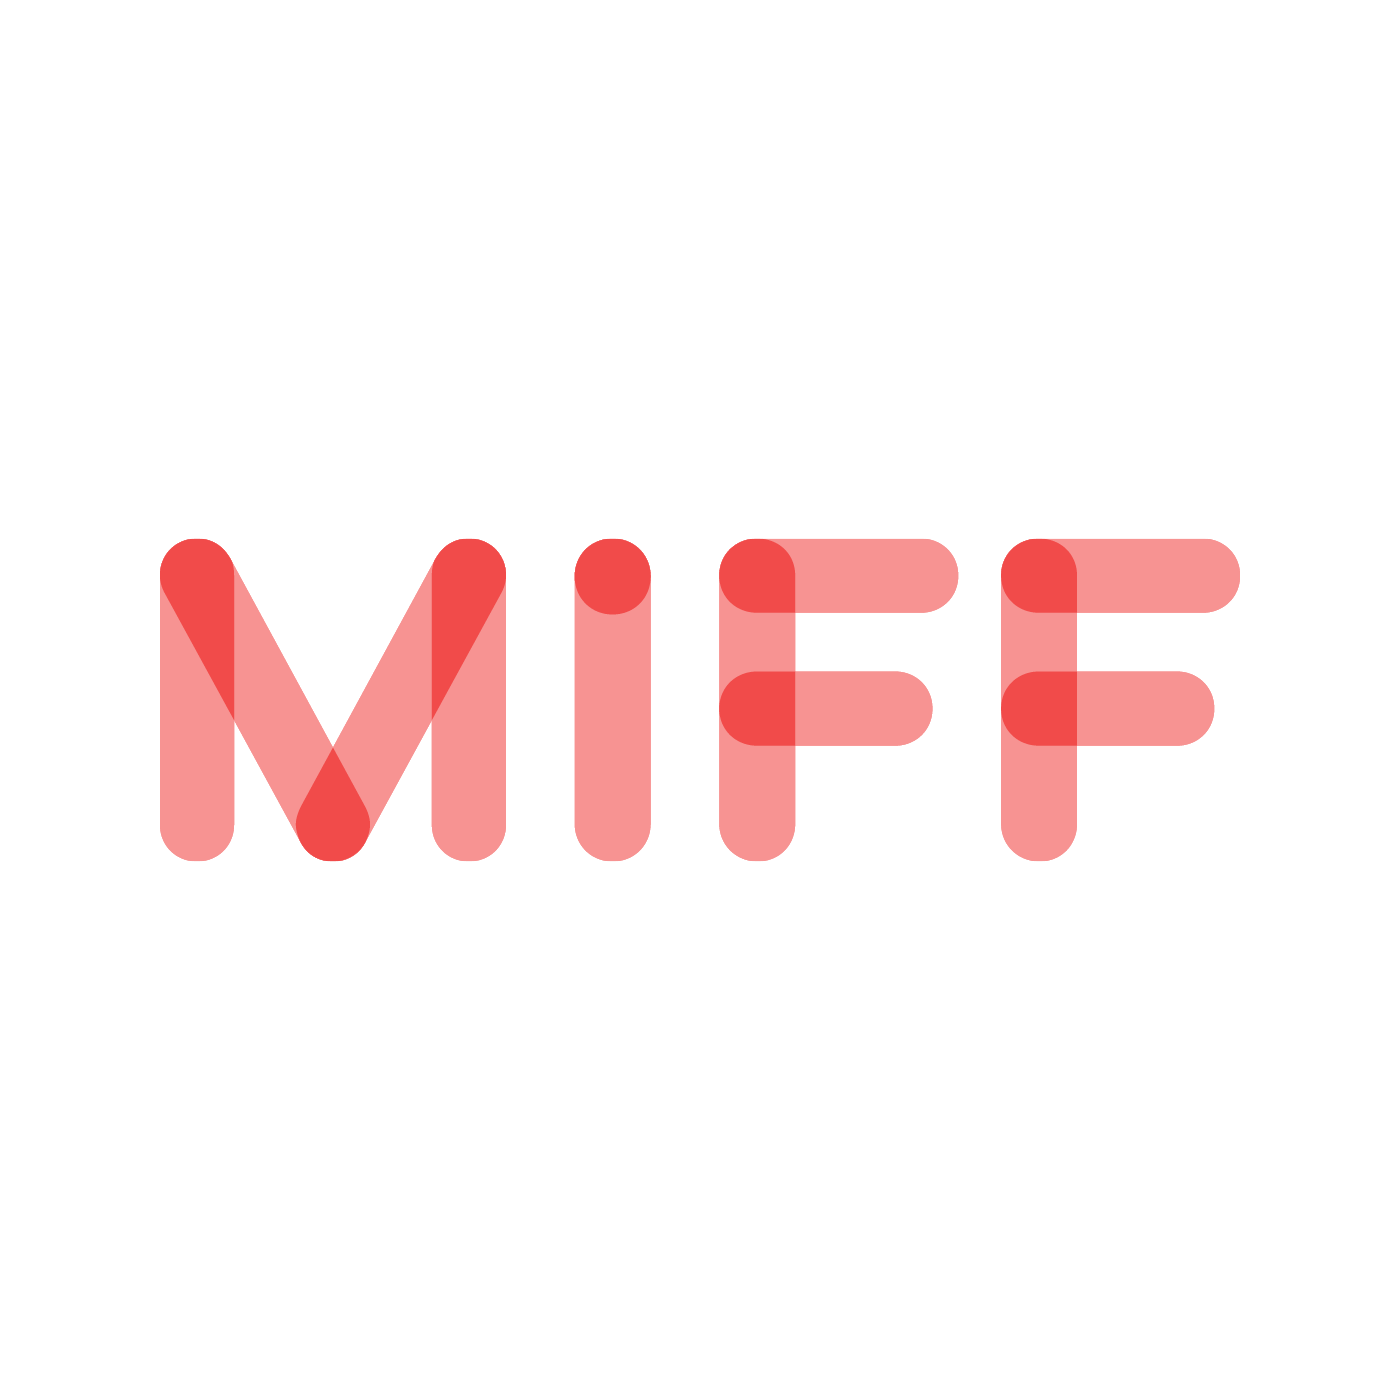 MIFF 2021 Melbourne International Film Festival adjusts hybrid lineup